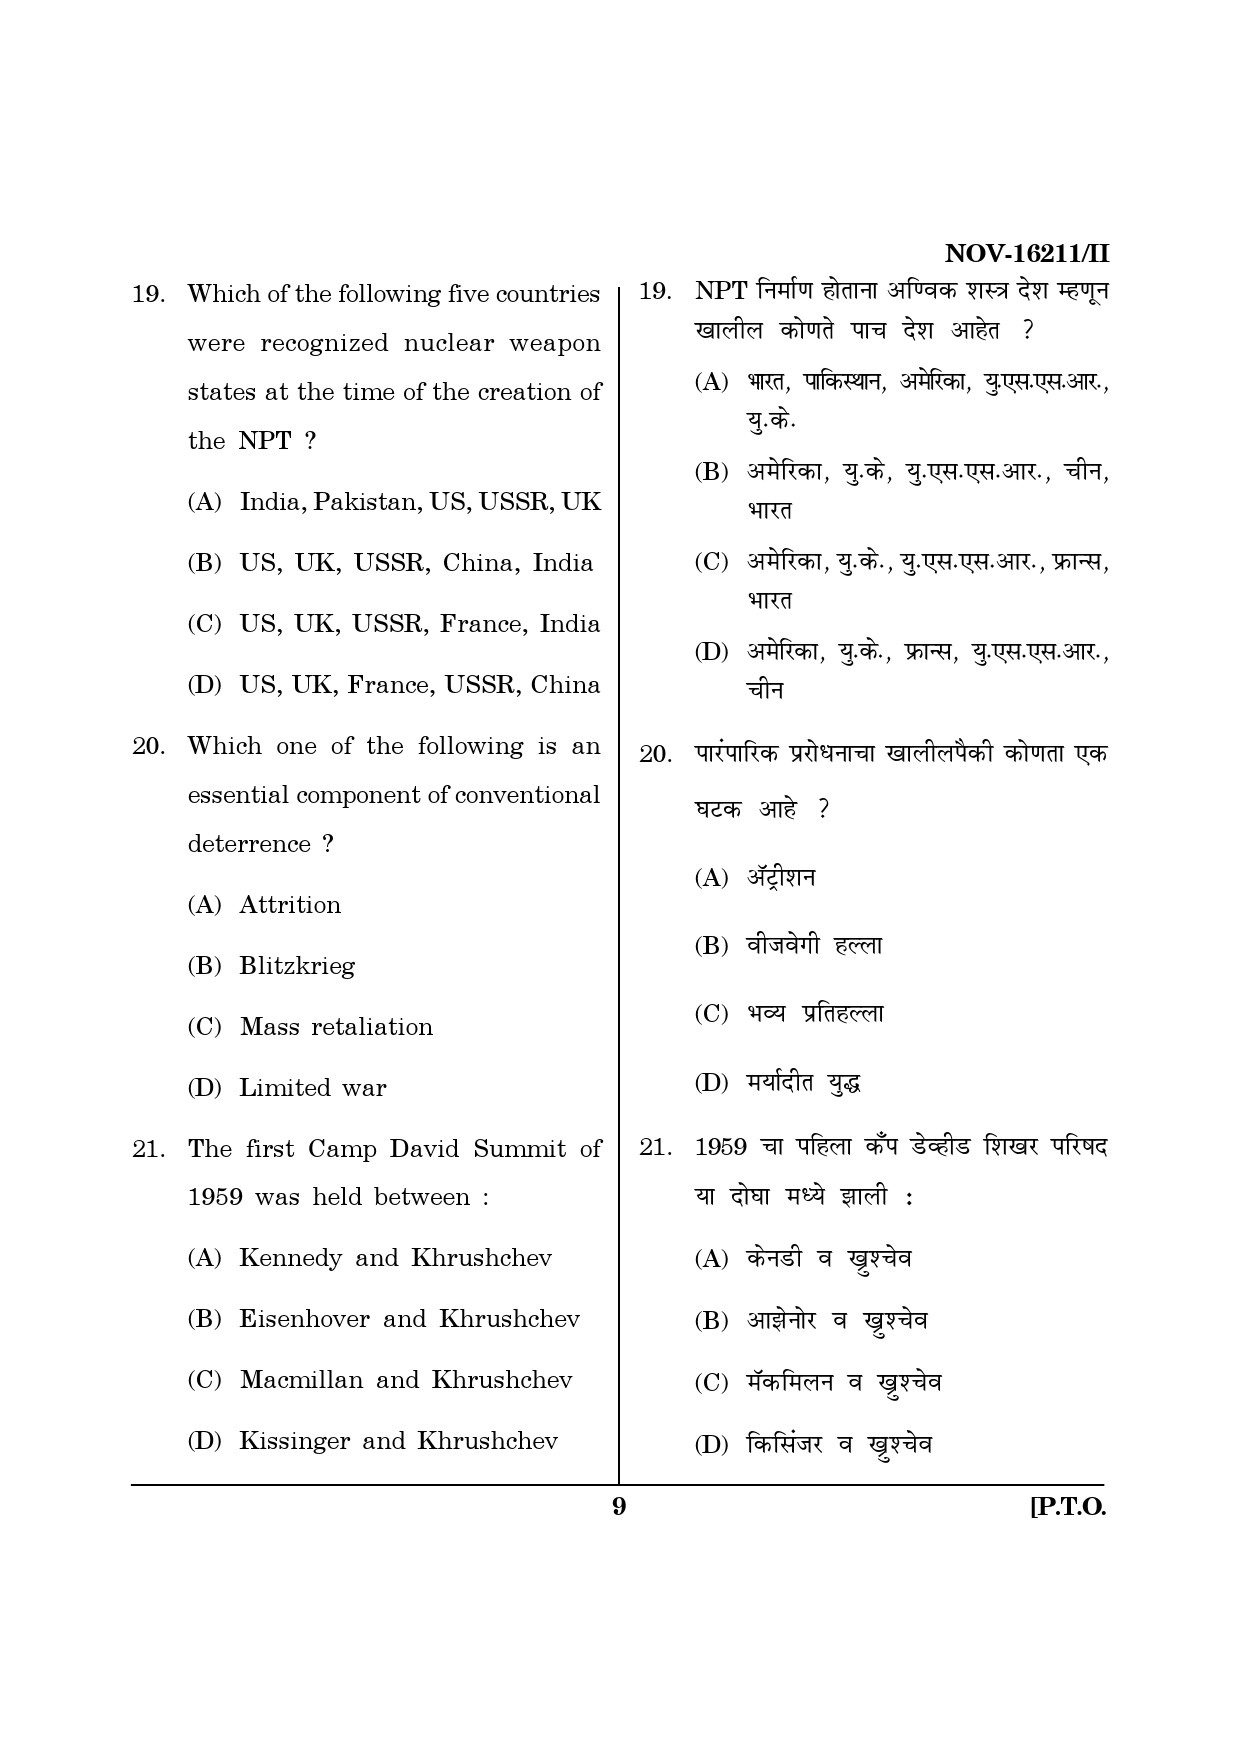 Maharashtra SET Defence and Strategic Studies Question Paper II November 2011 9